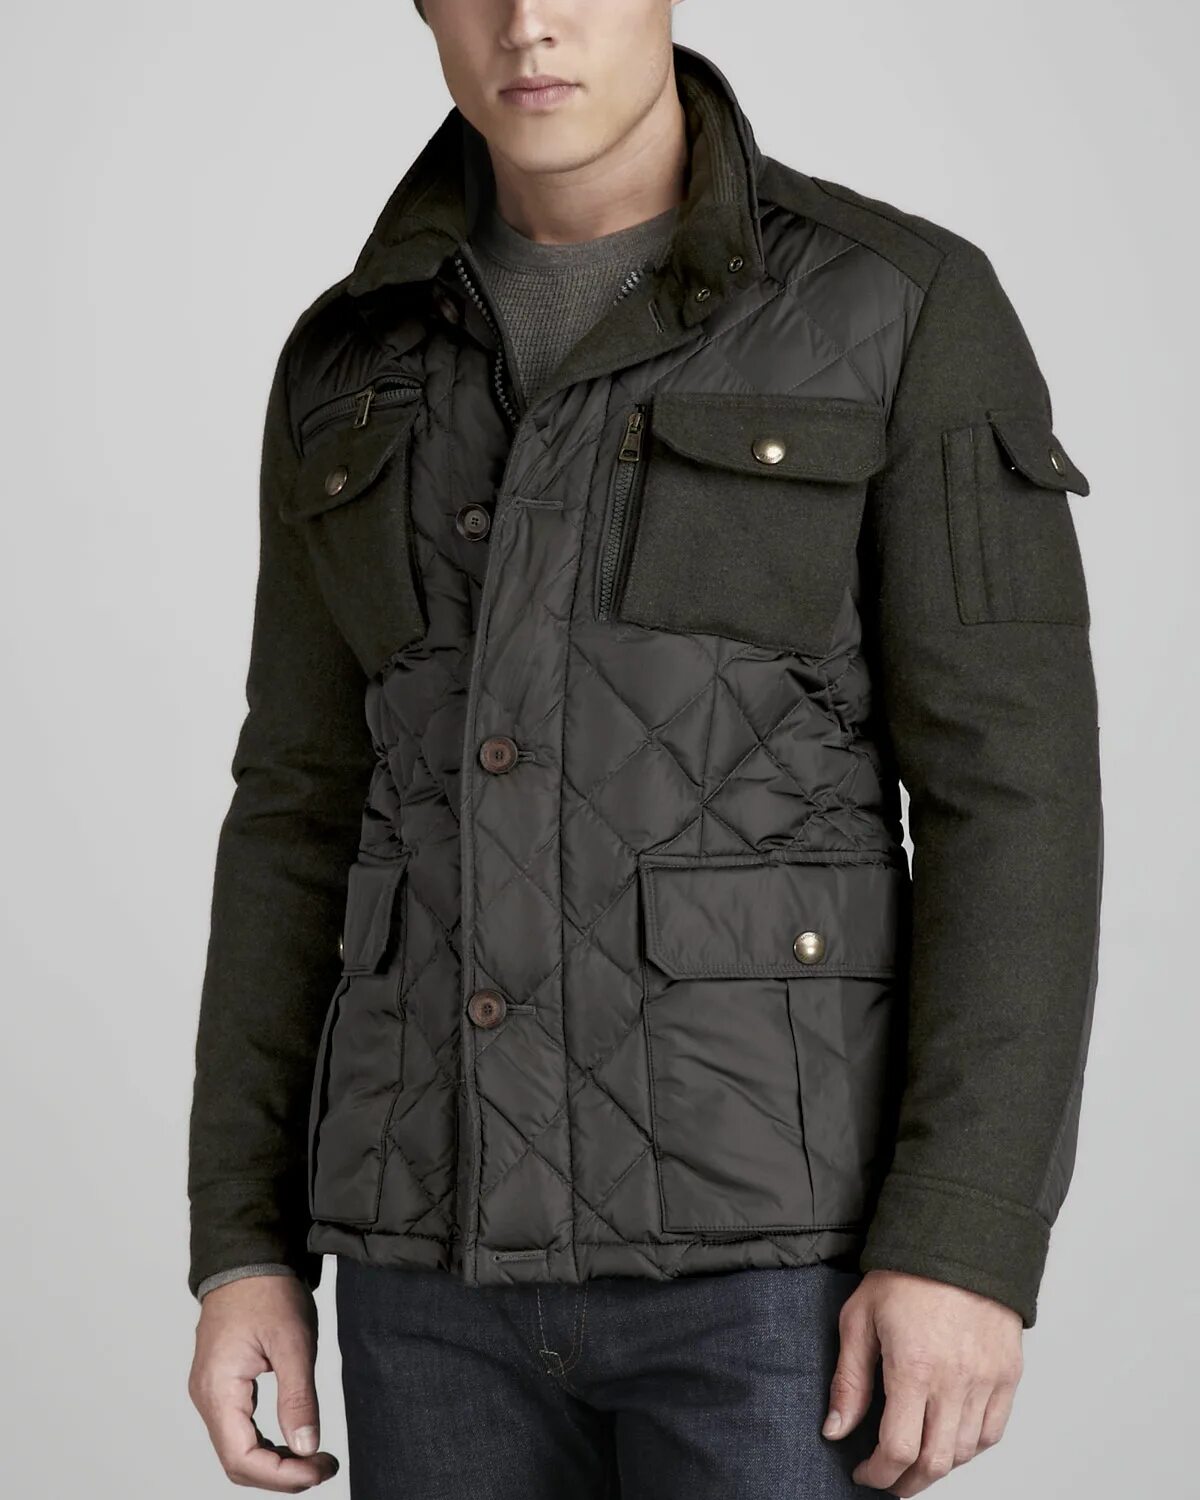 Код пуховика. Moncler field Jacket. Куртка милитари мужская монклер. Area code зимние куртки. Нортвест куртки.